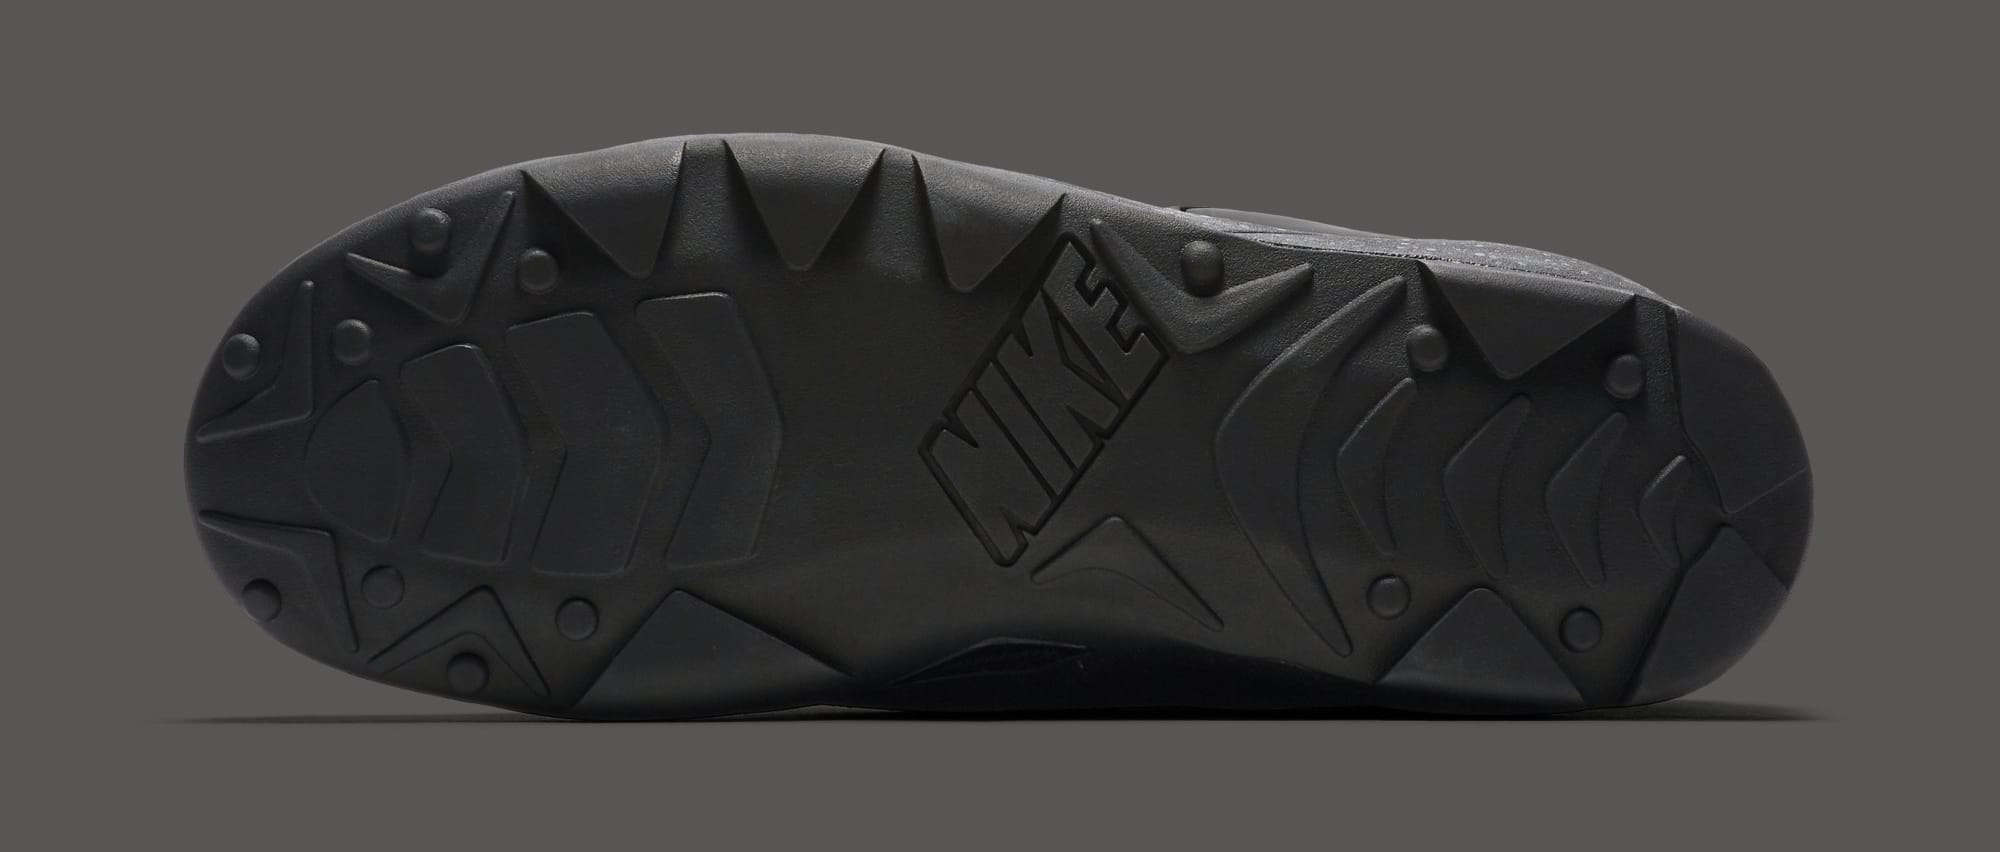 Nike Air Revaderchi &#x27;Black/Anthracite-Black&#x27; AR0479-002 (Bottom)